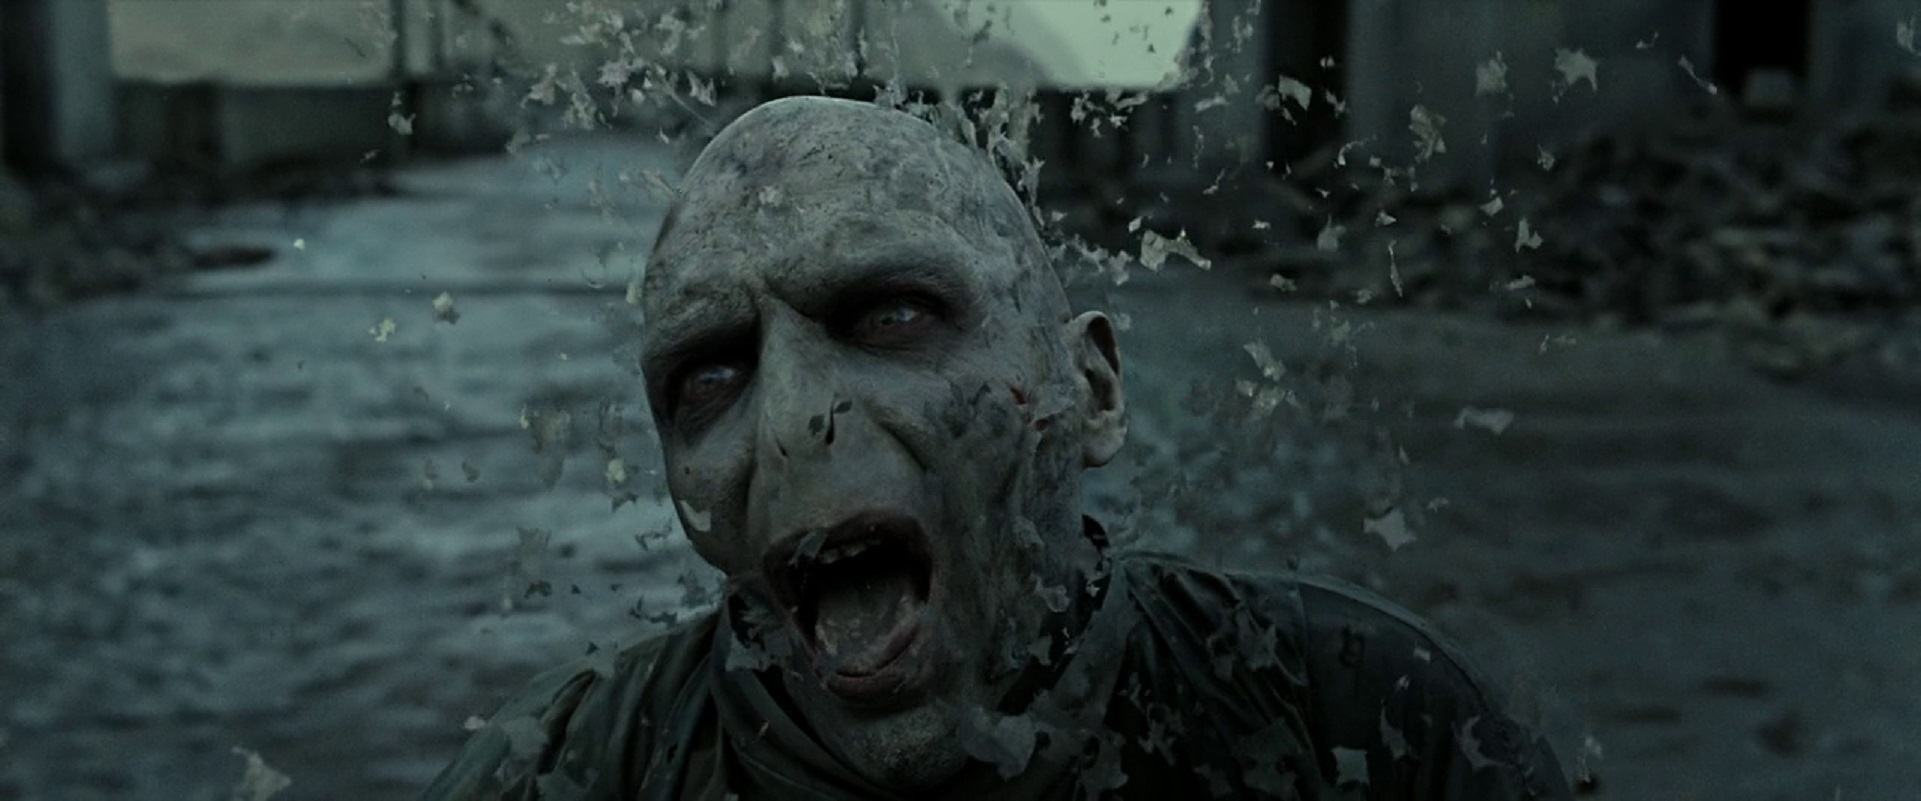 Lord Voldemort - Villains Wiki - villains, bad guys, comic ...